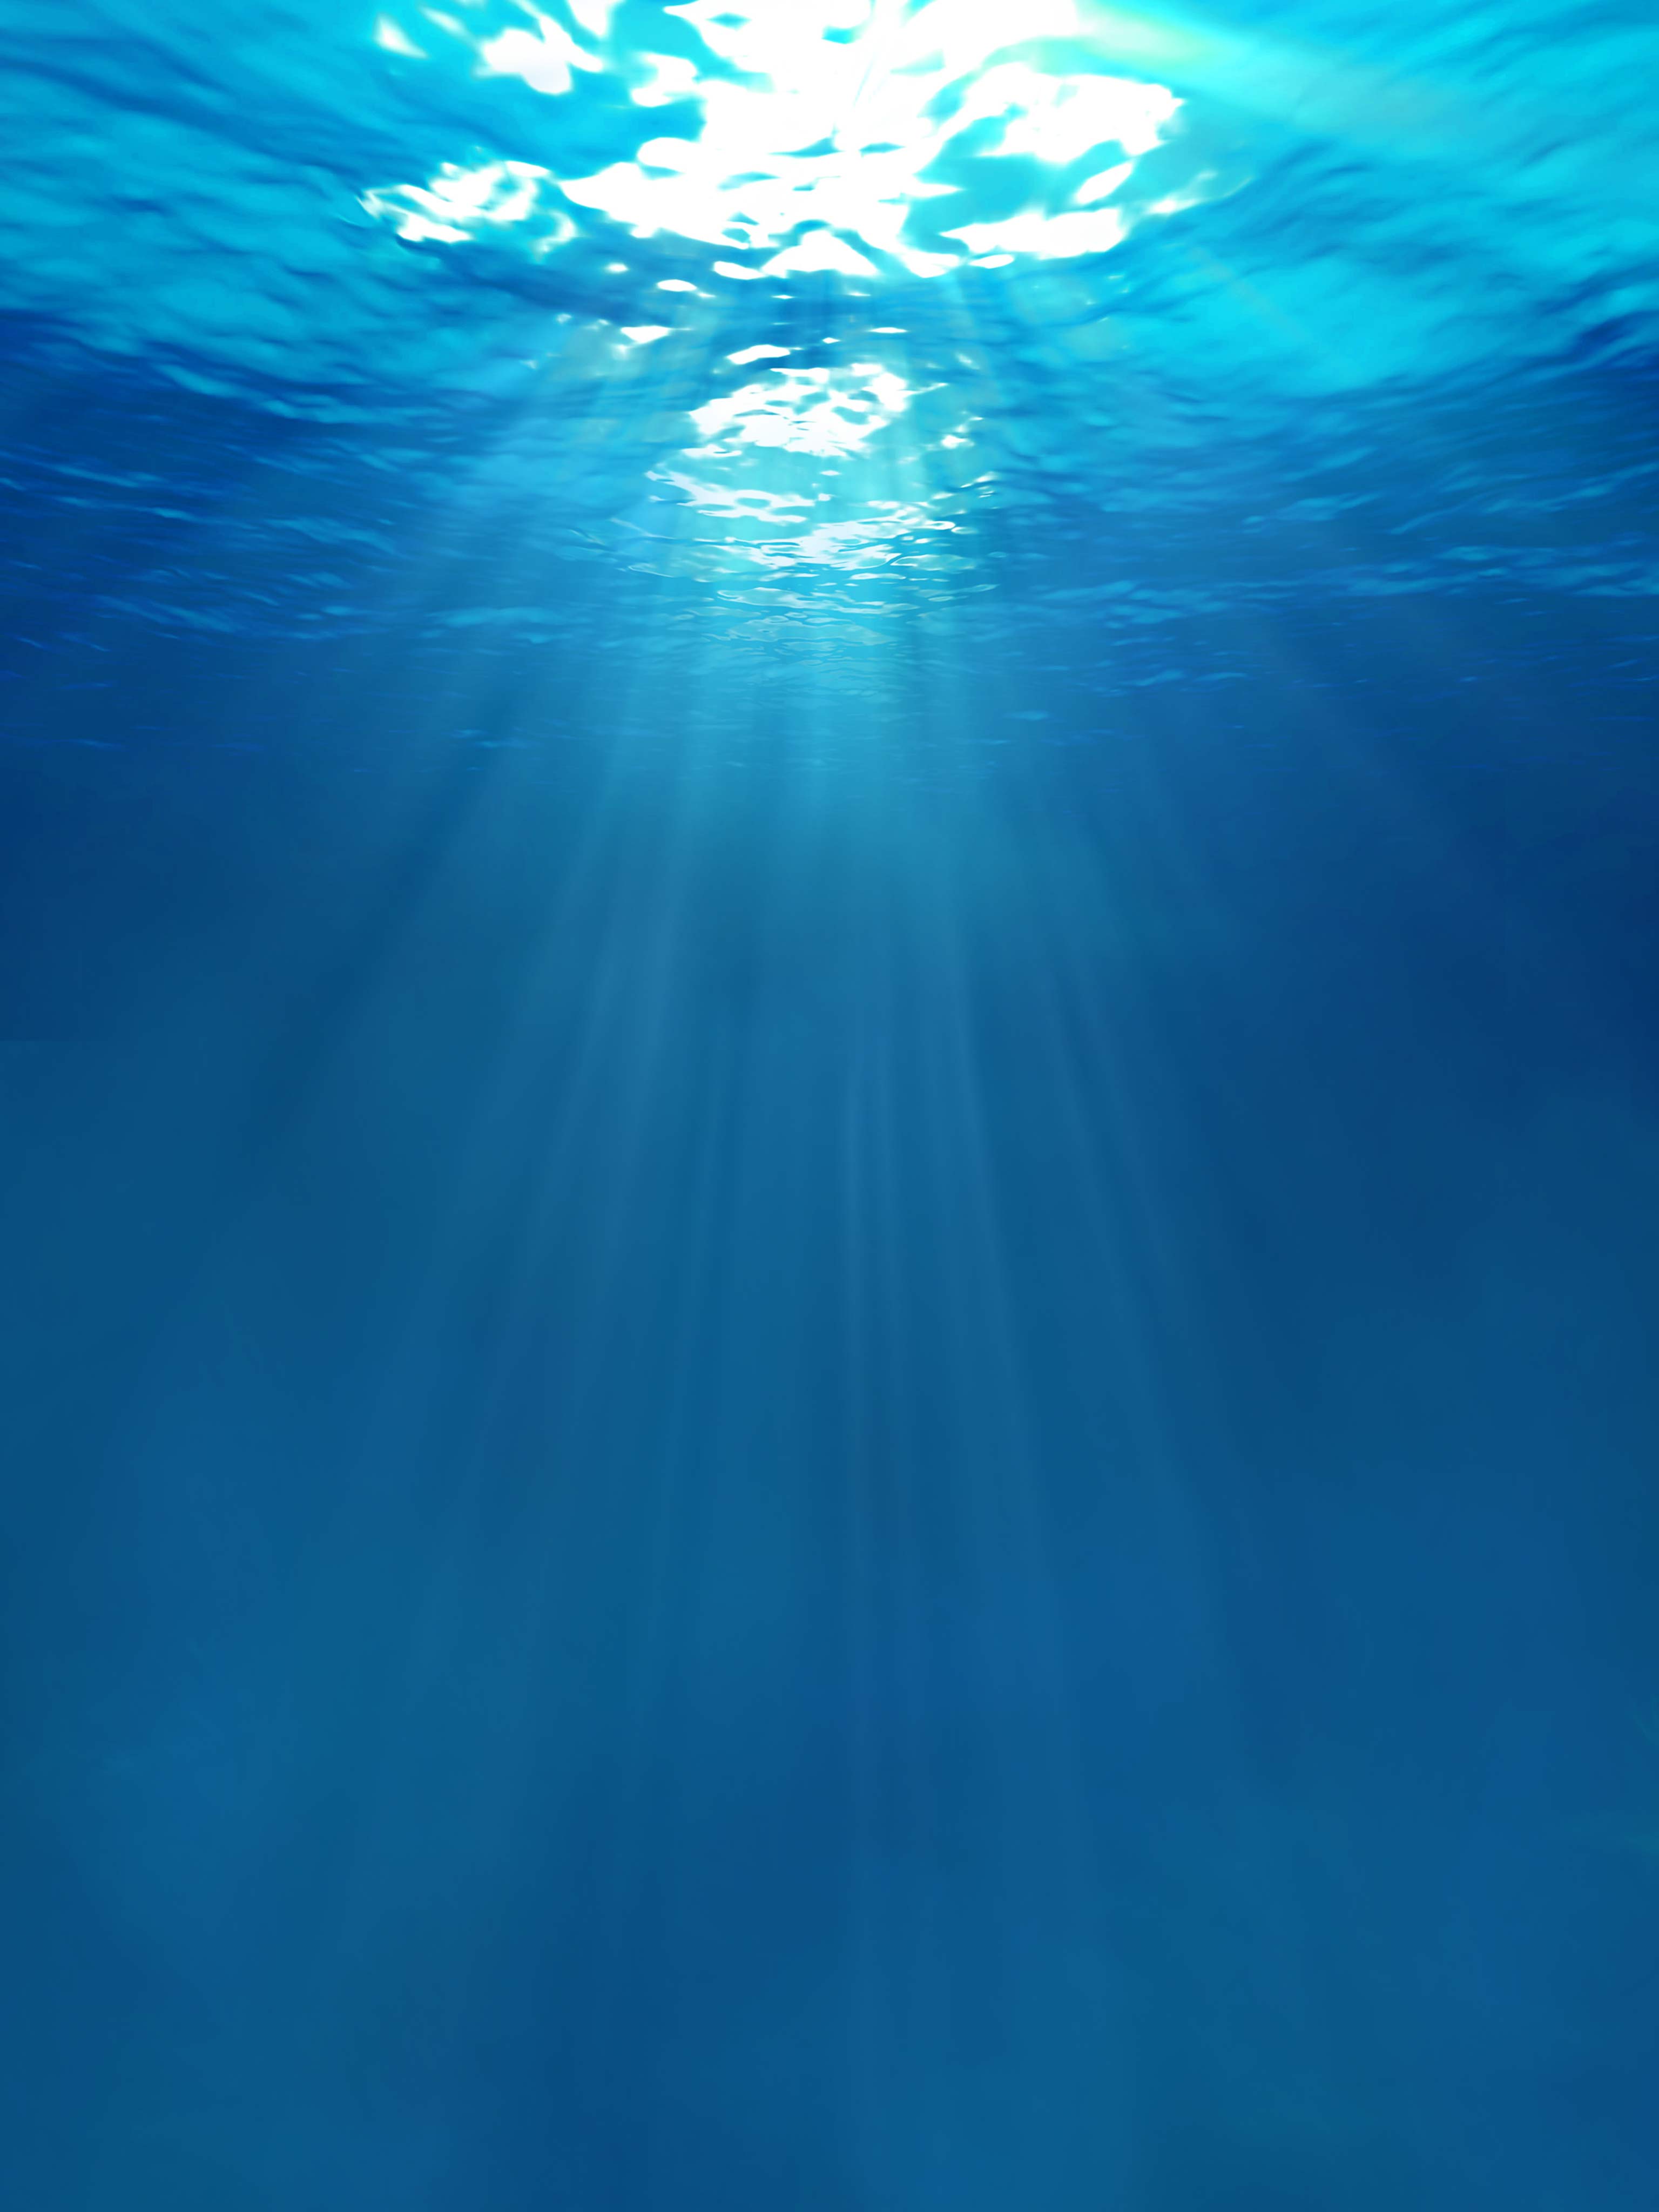 Underwater Sun Rays Mobile Wallpaper - Underwater Sun Rays , HD Wallpaper & Backgrounds